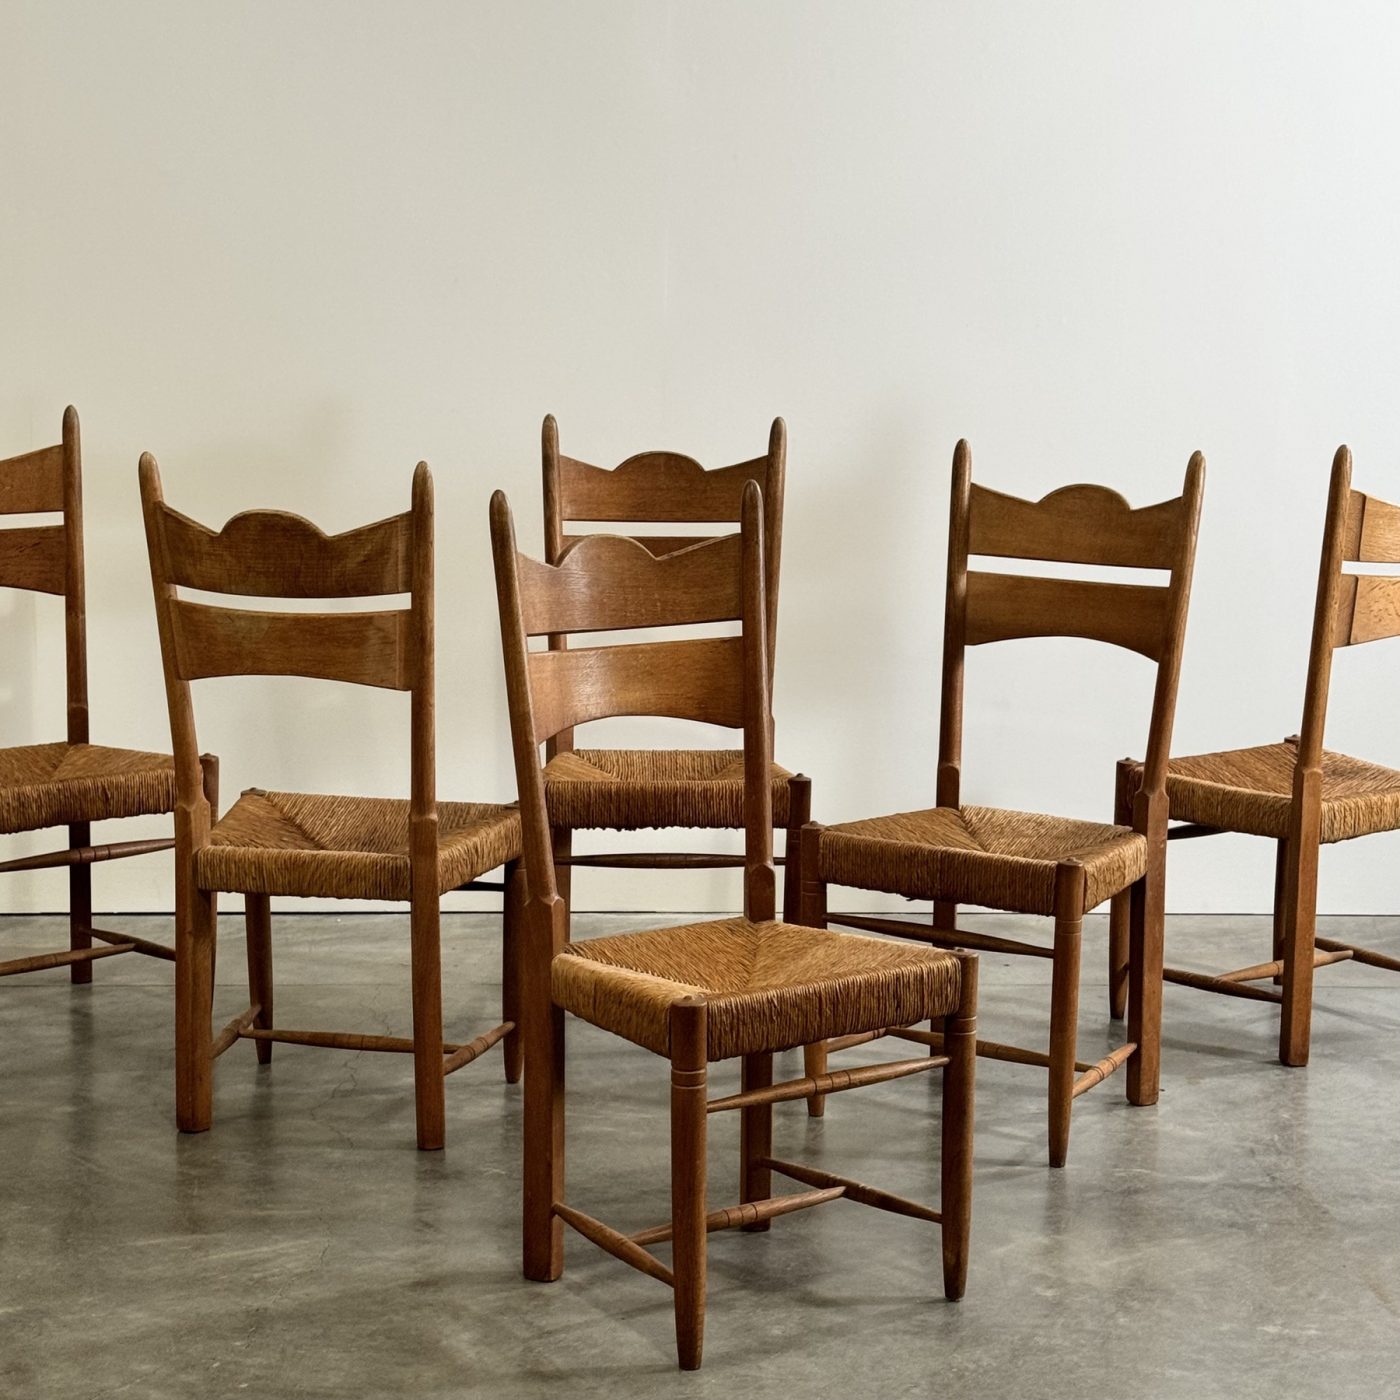 objet-vagabond-rustic-chairs0015